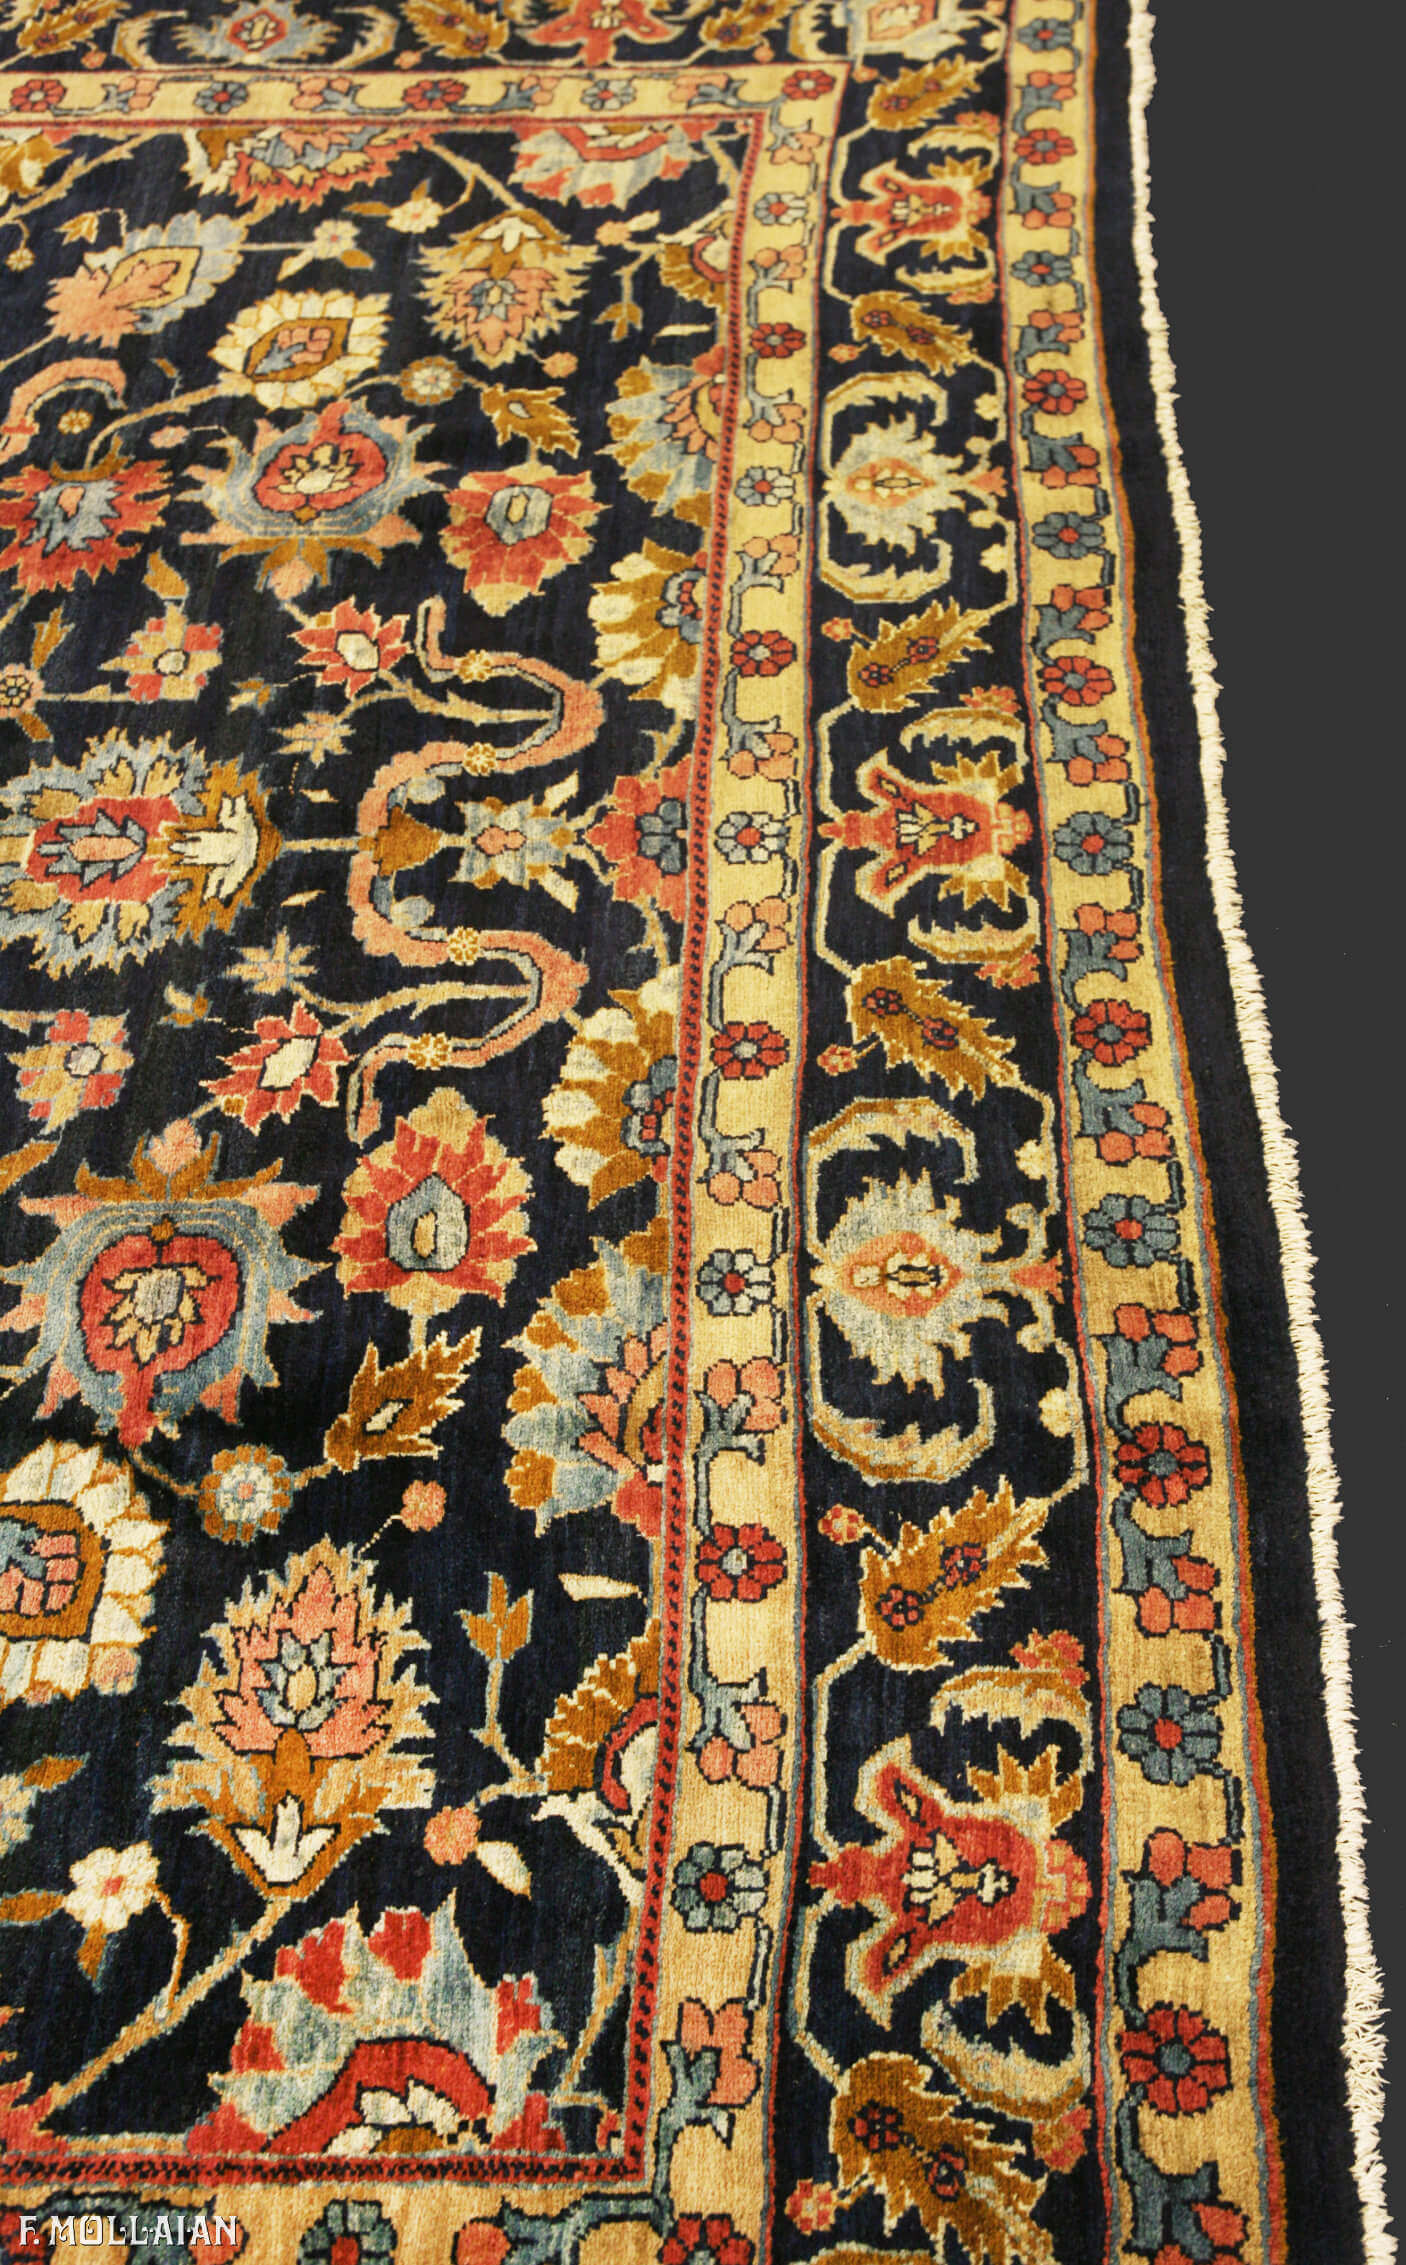 Antique Persian Saruk Mohajeran Gallery Size Carpet n°:92116590